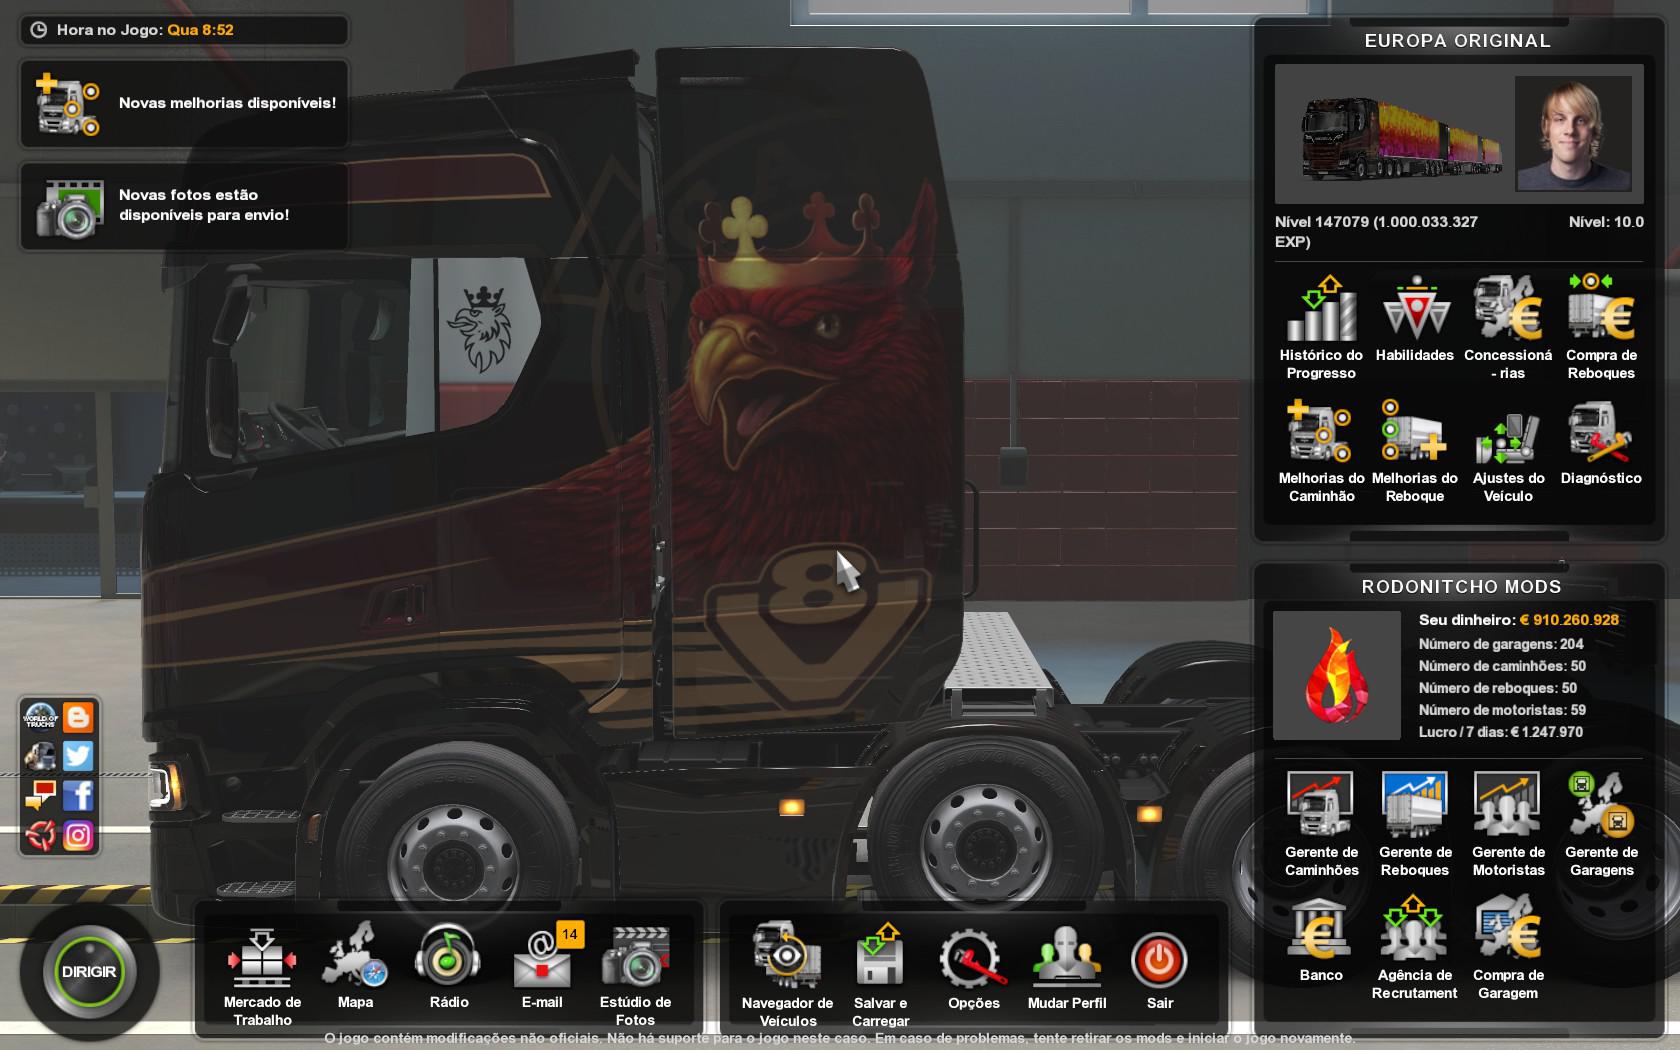 скачать мод на много денег на игру euro truck simulator 2 фото 17